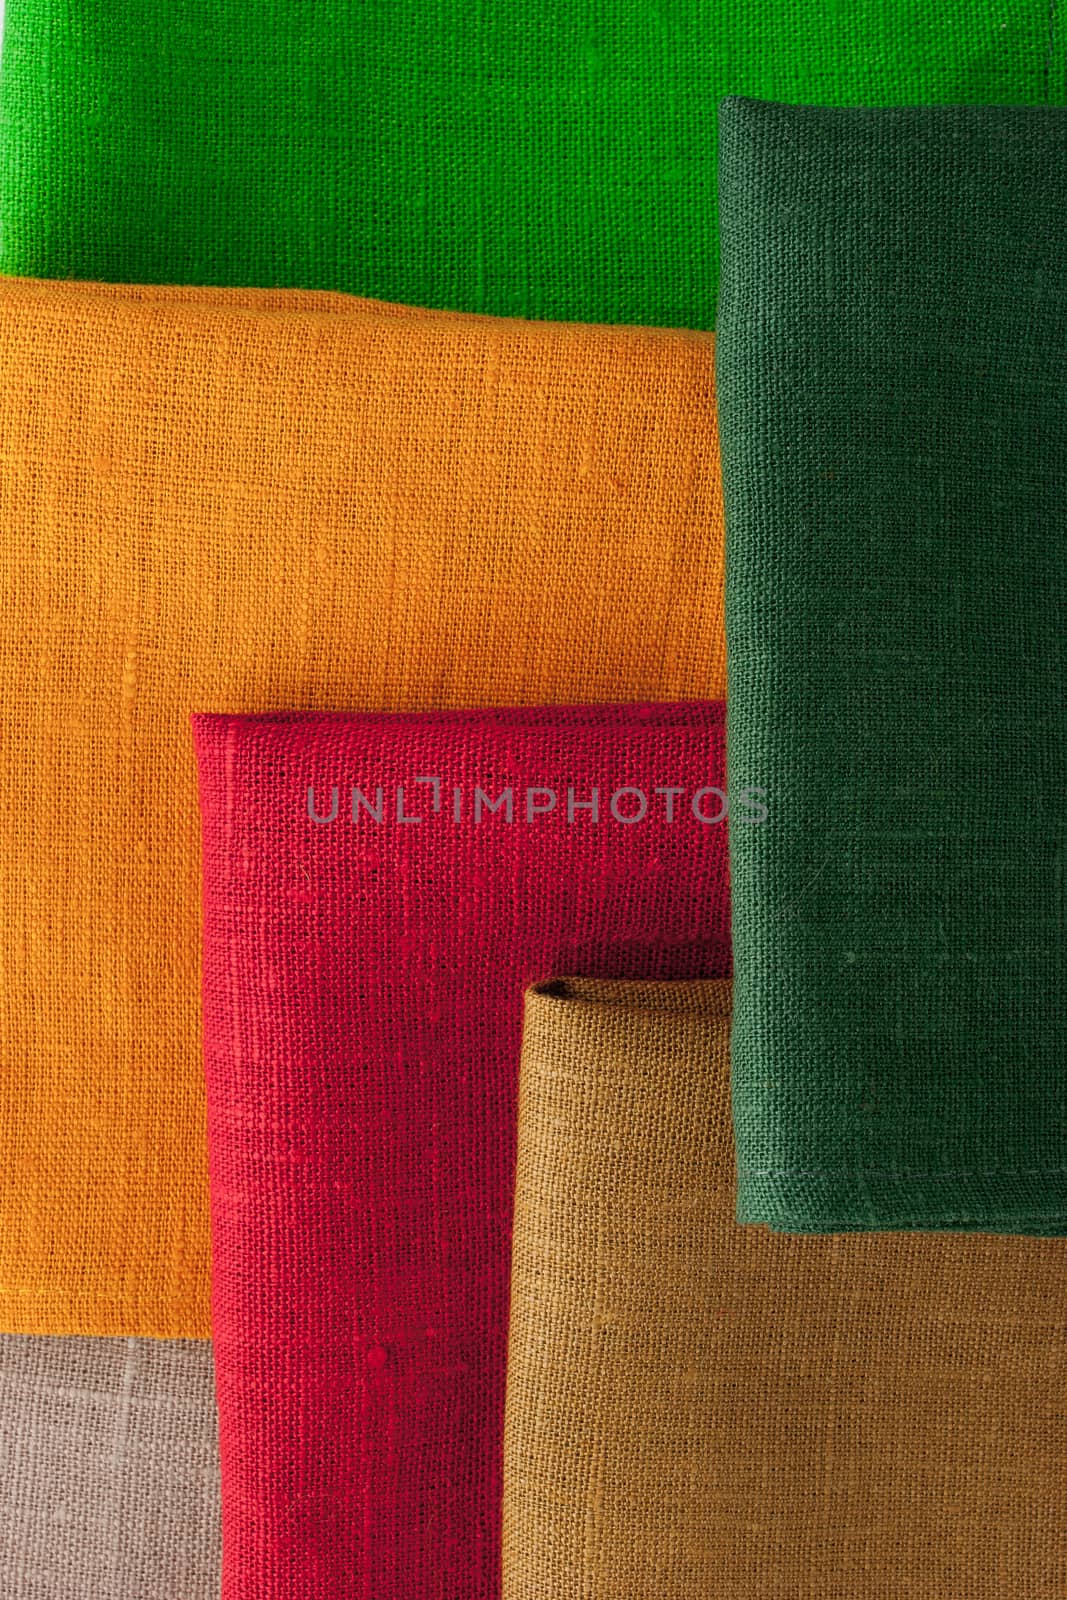 Colorful napkins  background  vertical by Deniskarpenkov